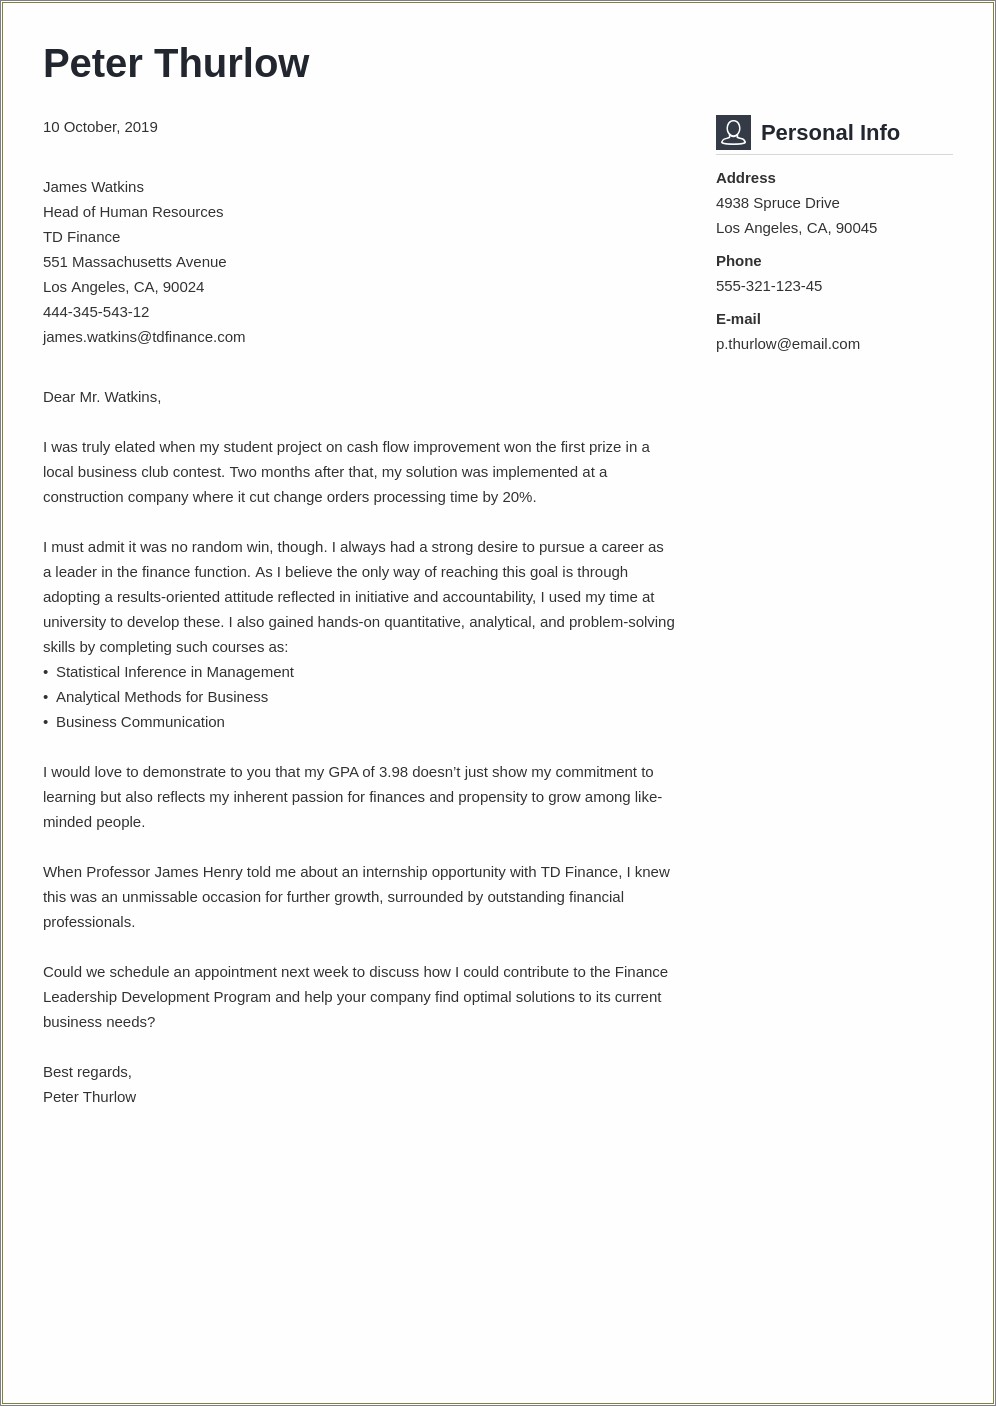 Resume Cover Letter For Engineering Internship